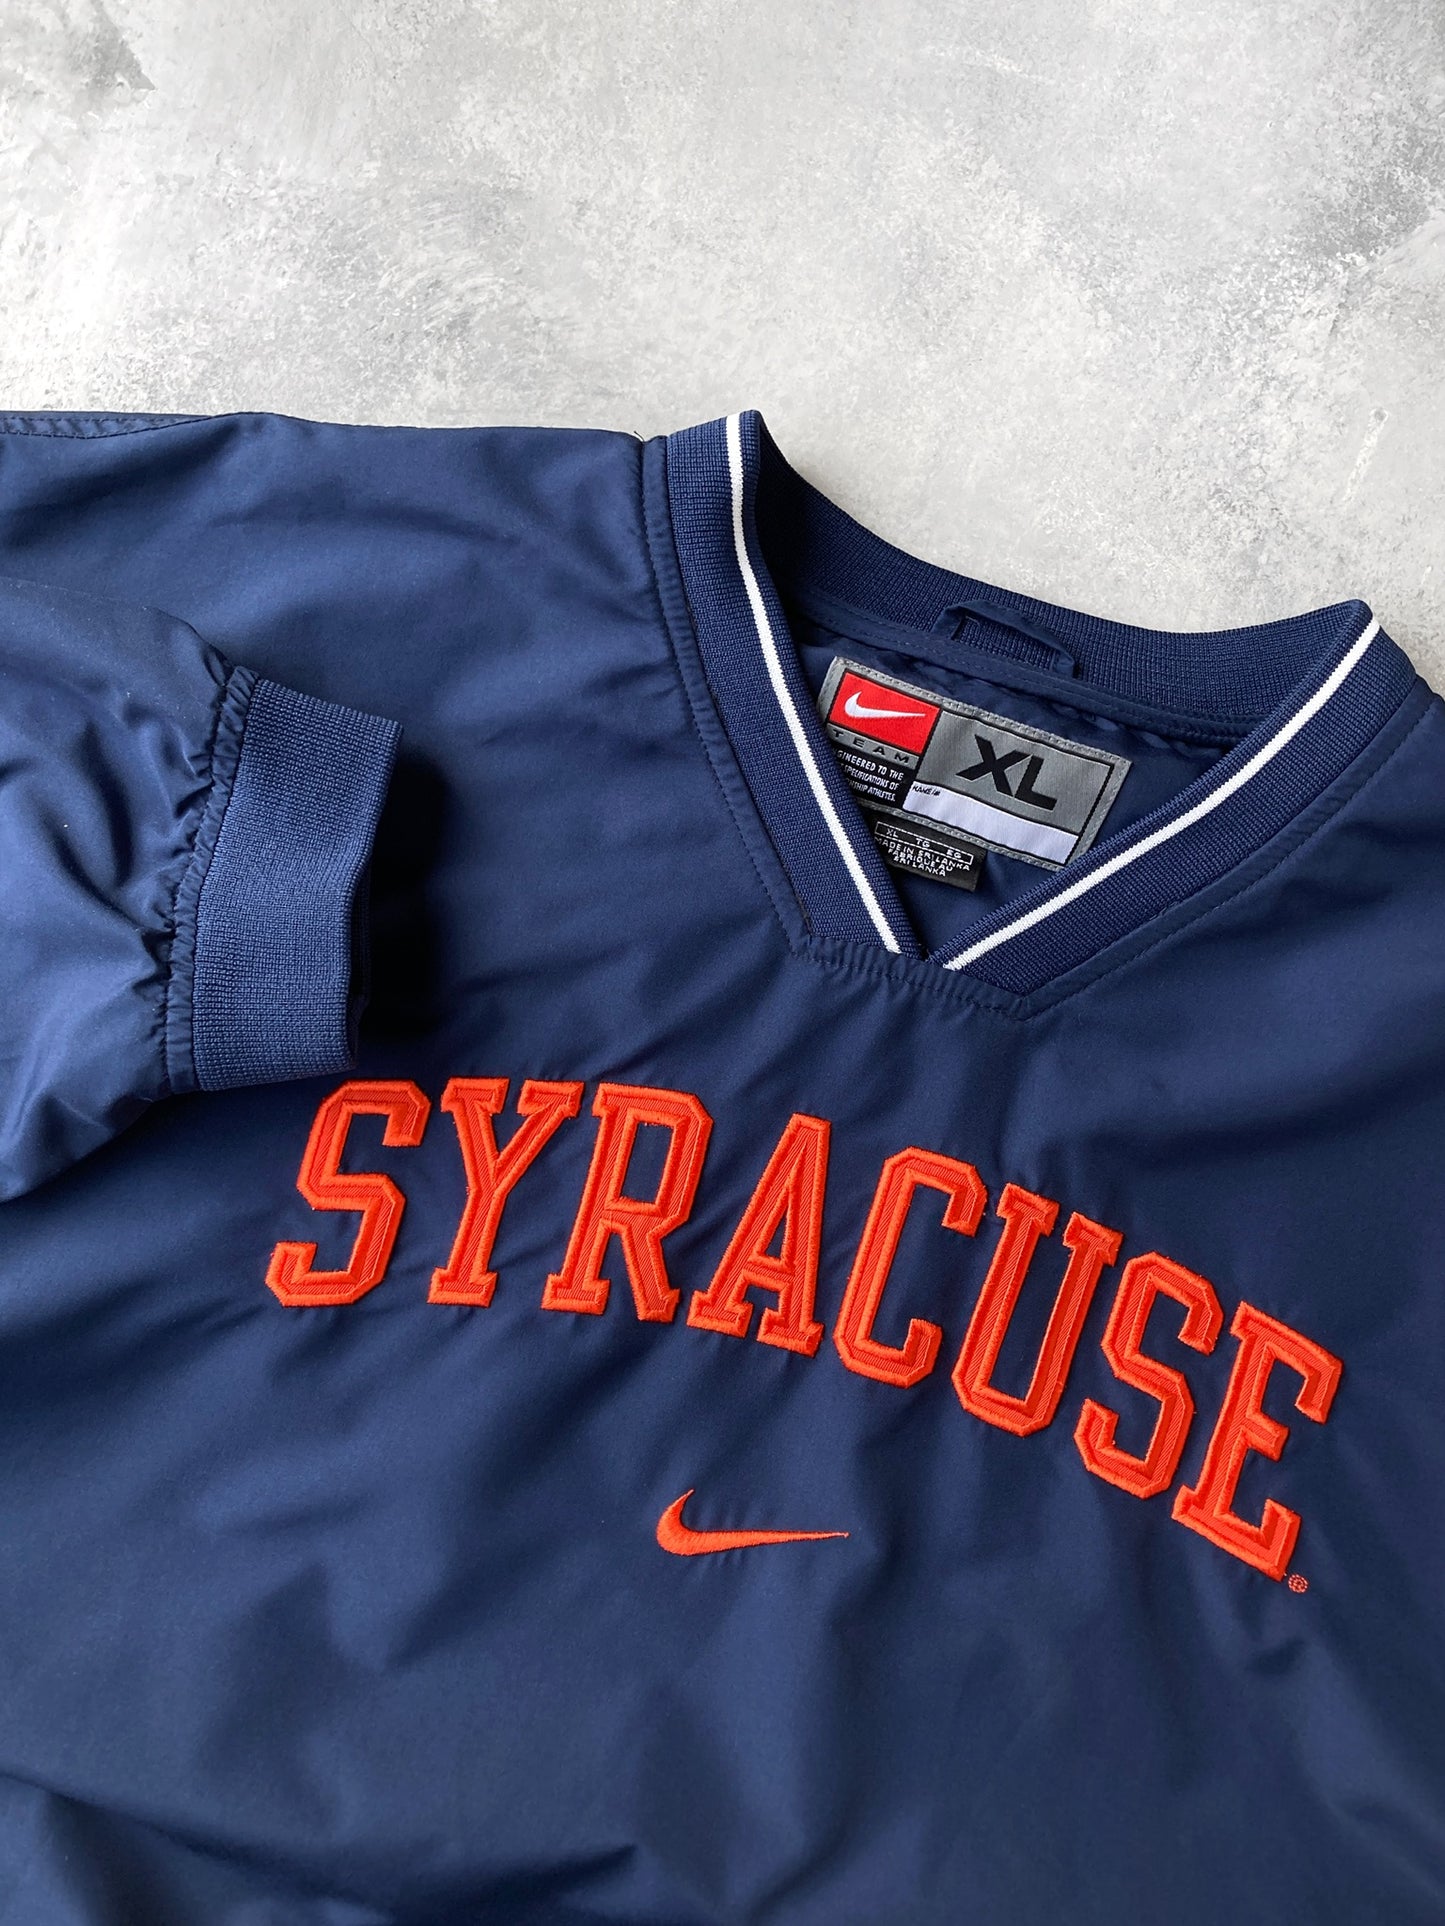 Nike Syracuse Pullover 00's - XL